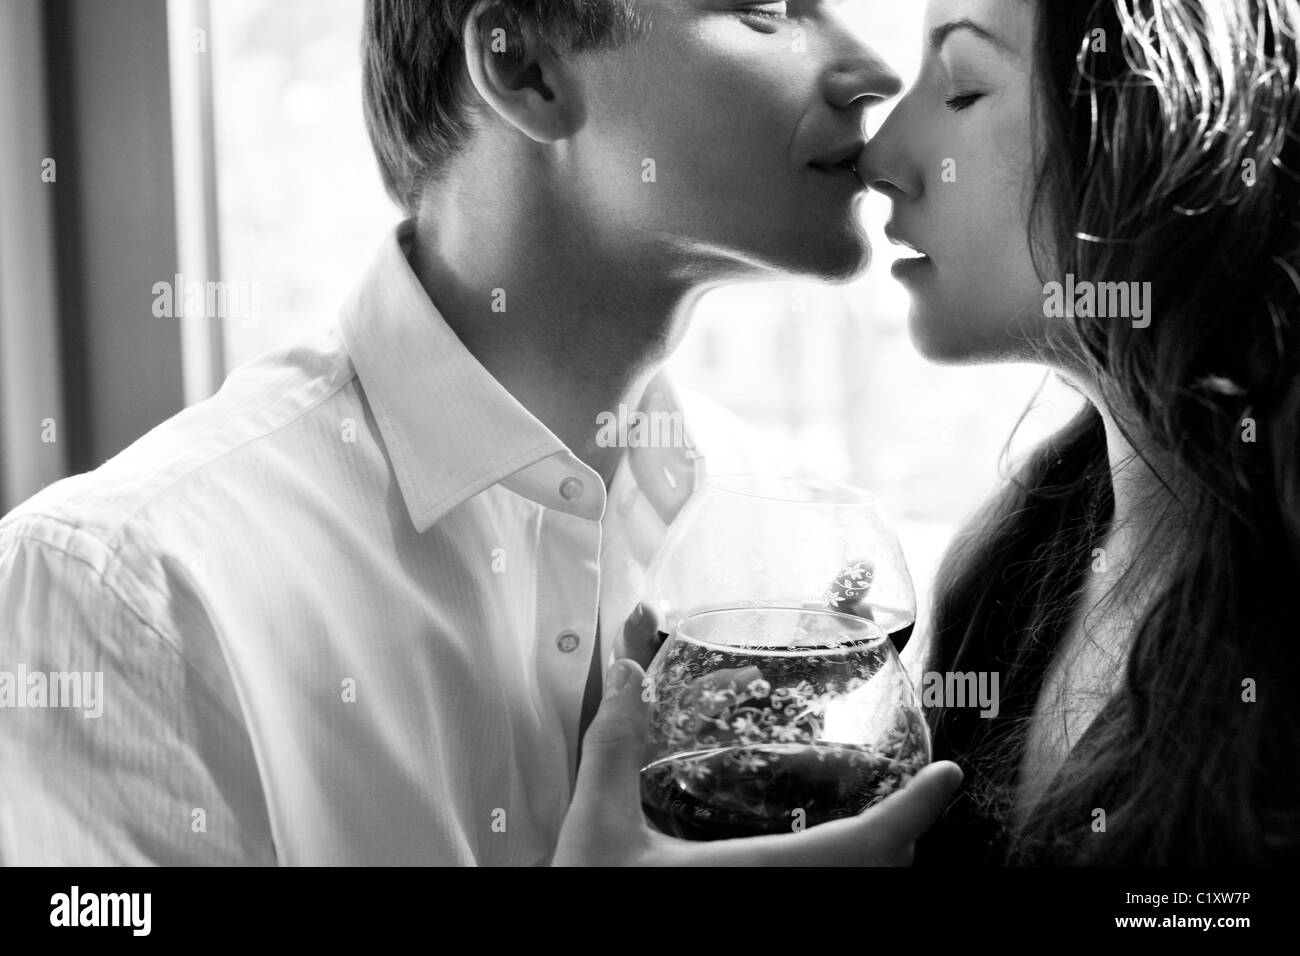 Man kissing woman Banque D'Images